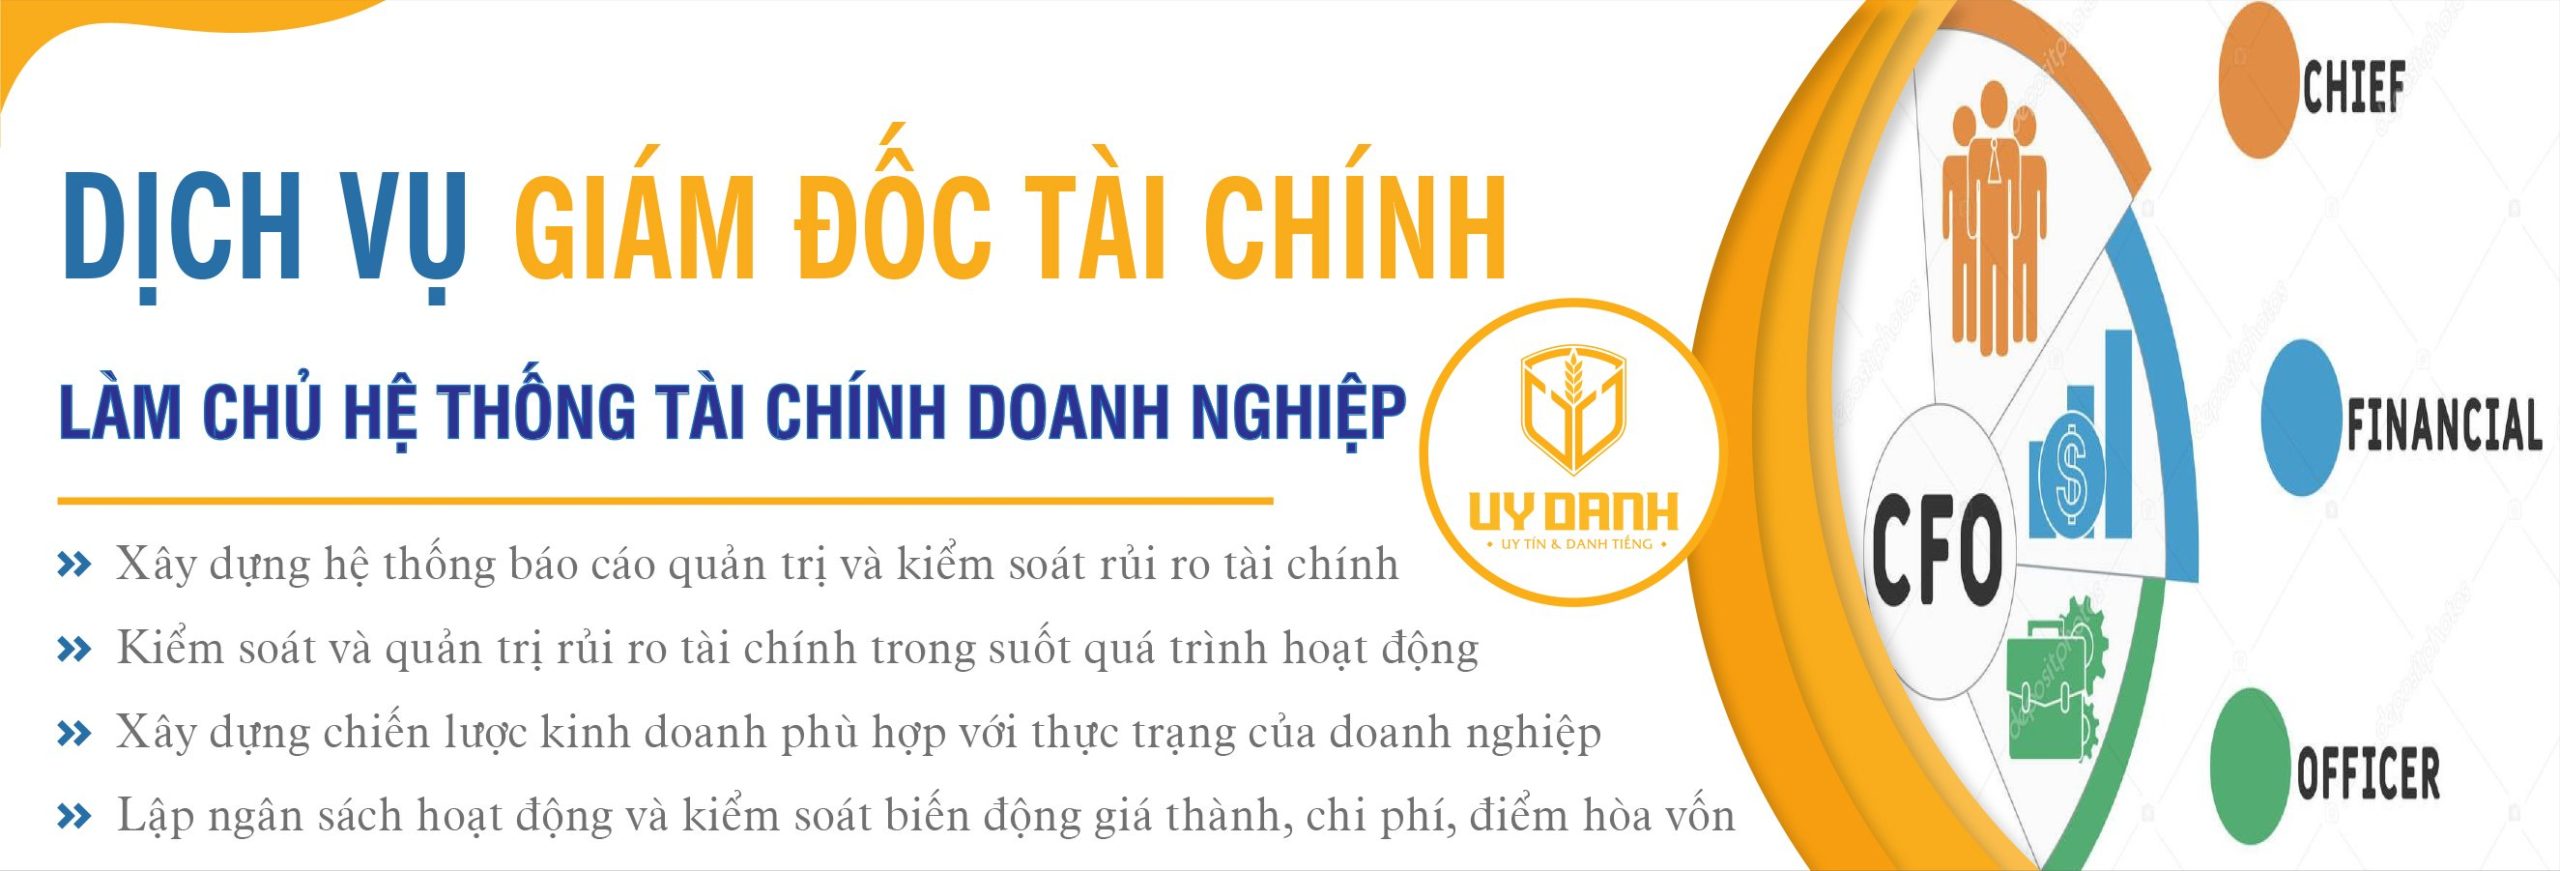 4.-Giam-doc-tai-chinh-scaled